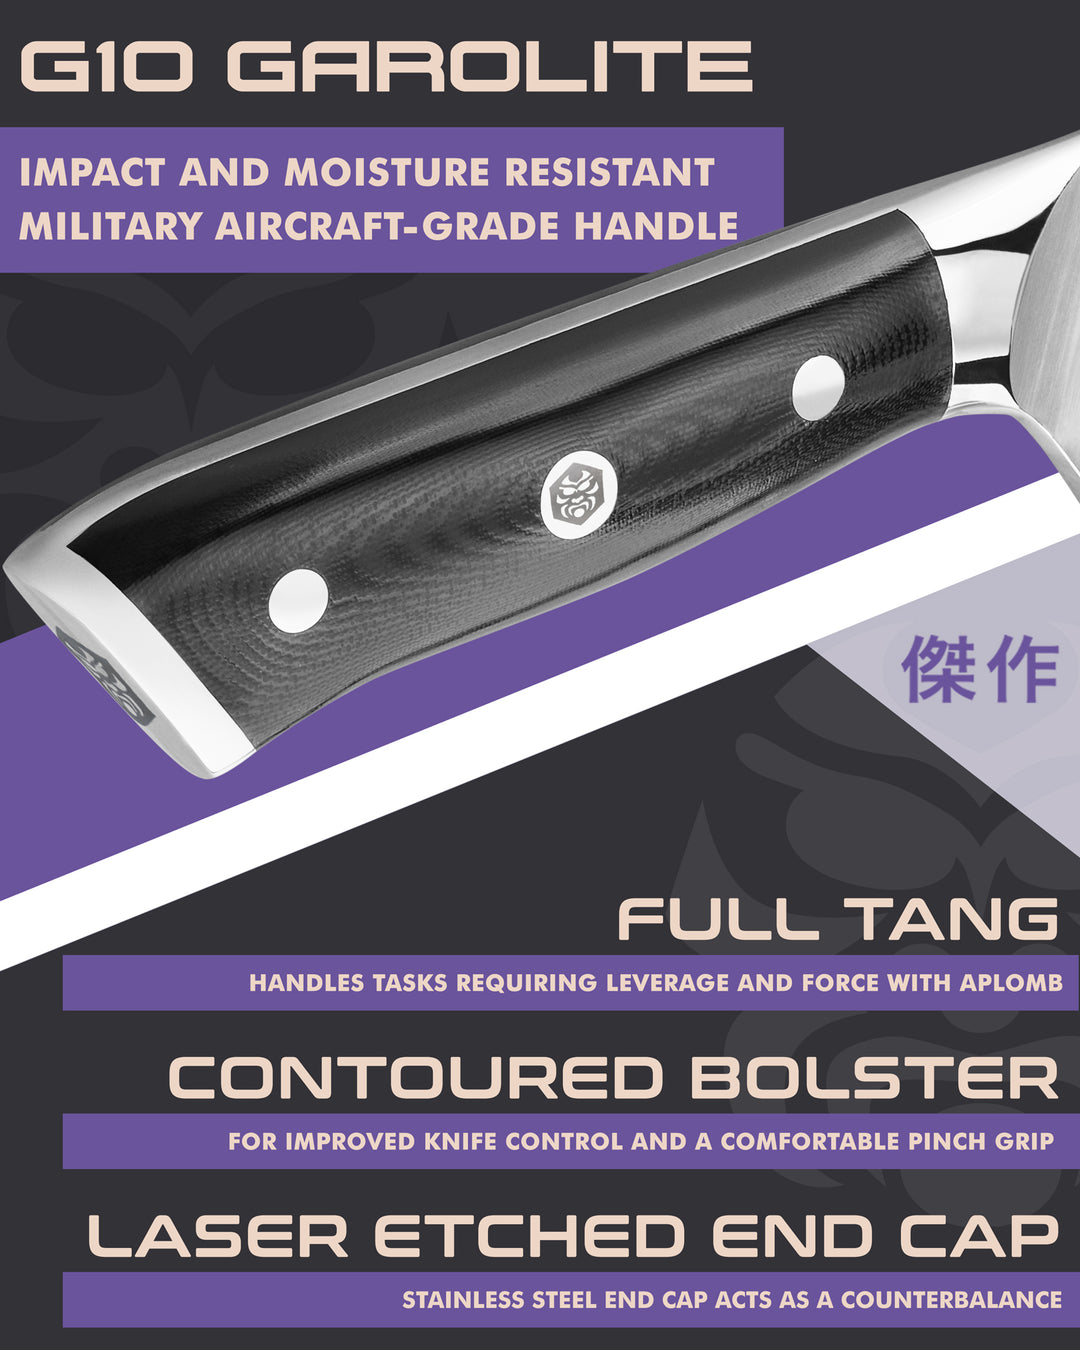 Kessaku Dynasty Butcher Knife handle features: G10 handle, full tang, contoured bolster, laser etched end cap